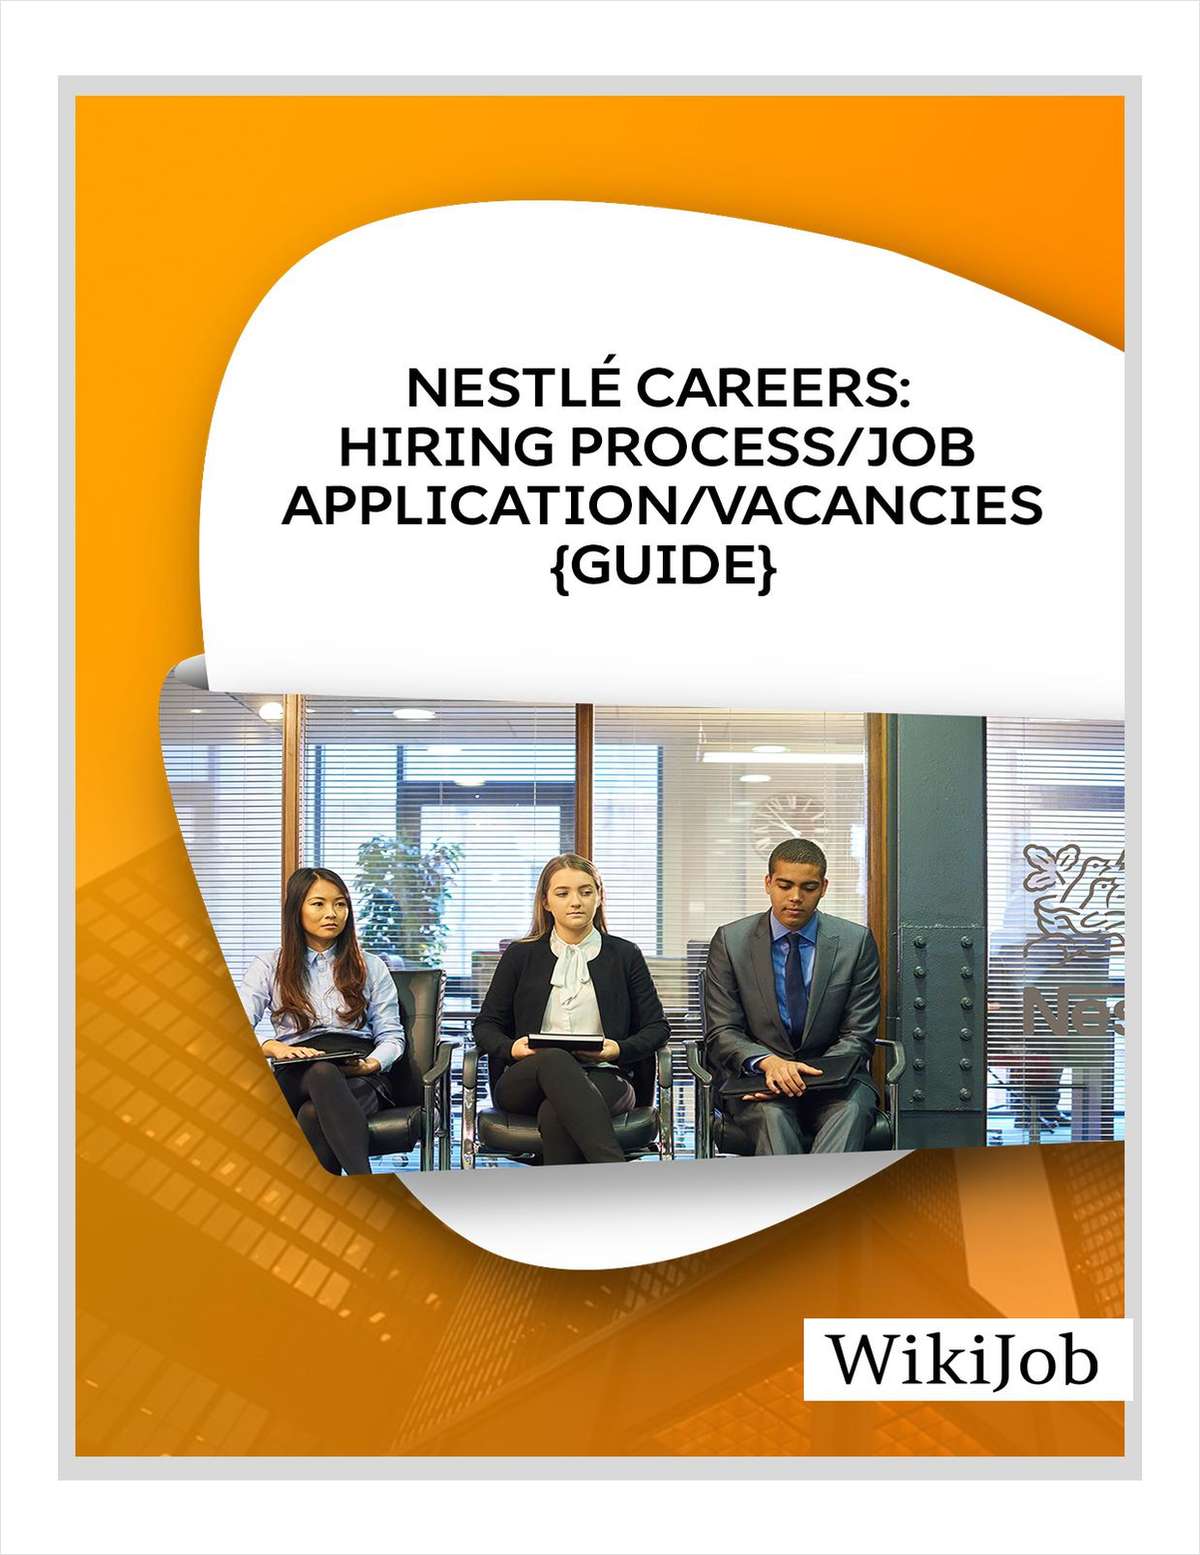 Nestlé Careers: Hiring Process/Job Application/Vacancies